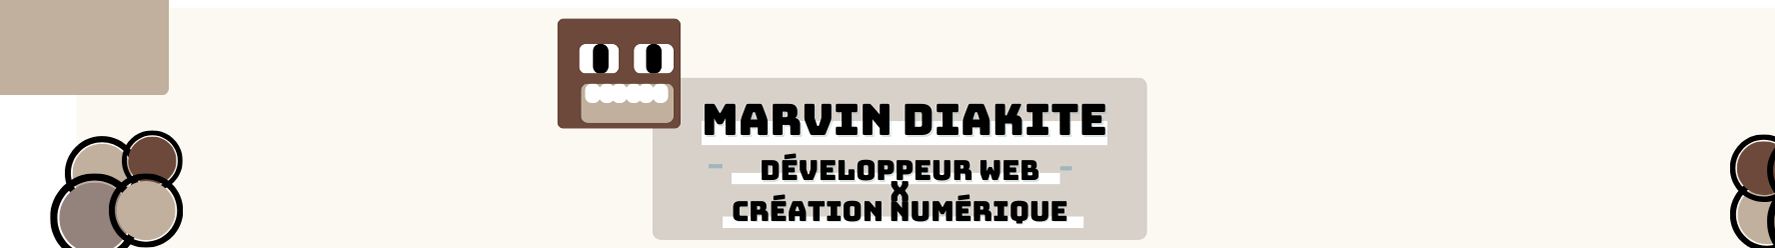 Marvin Diakites profilbanner